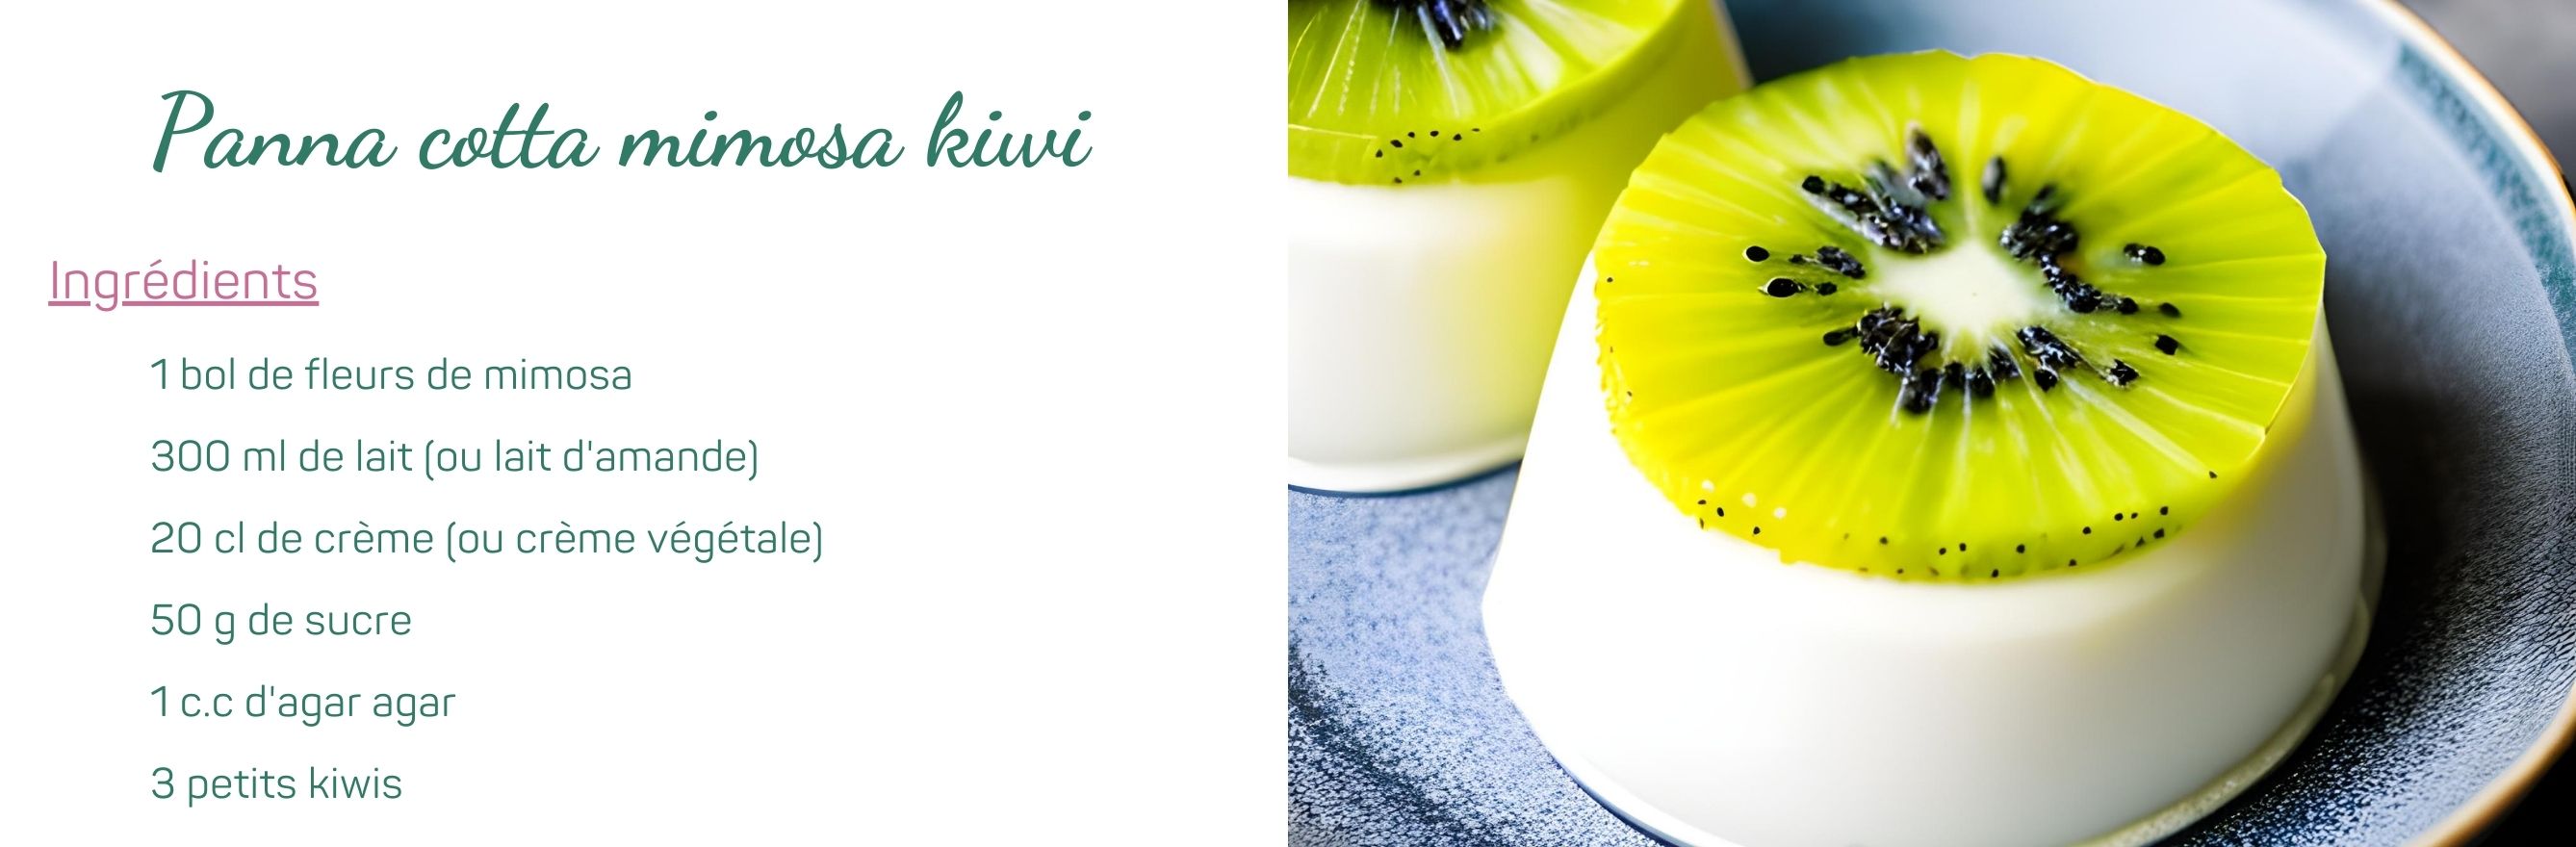 Recette de panna cotta mimosa kiwi